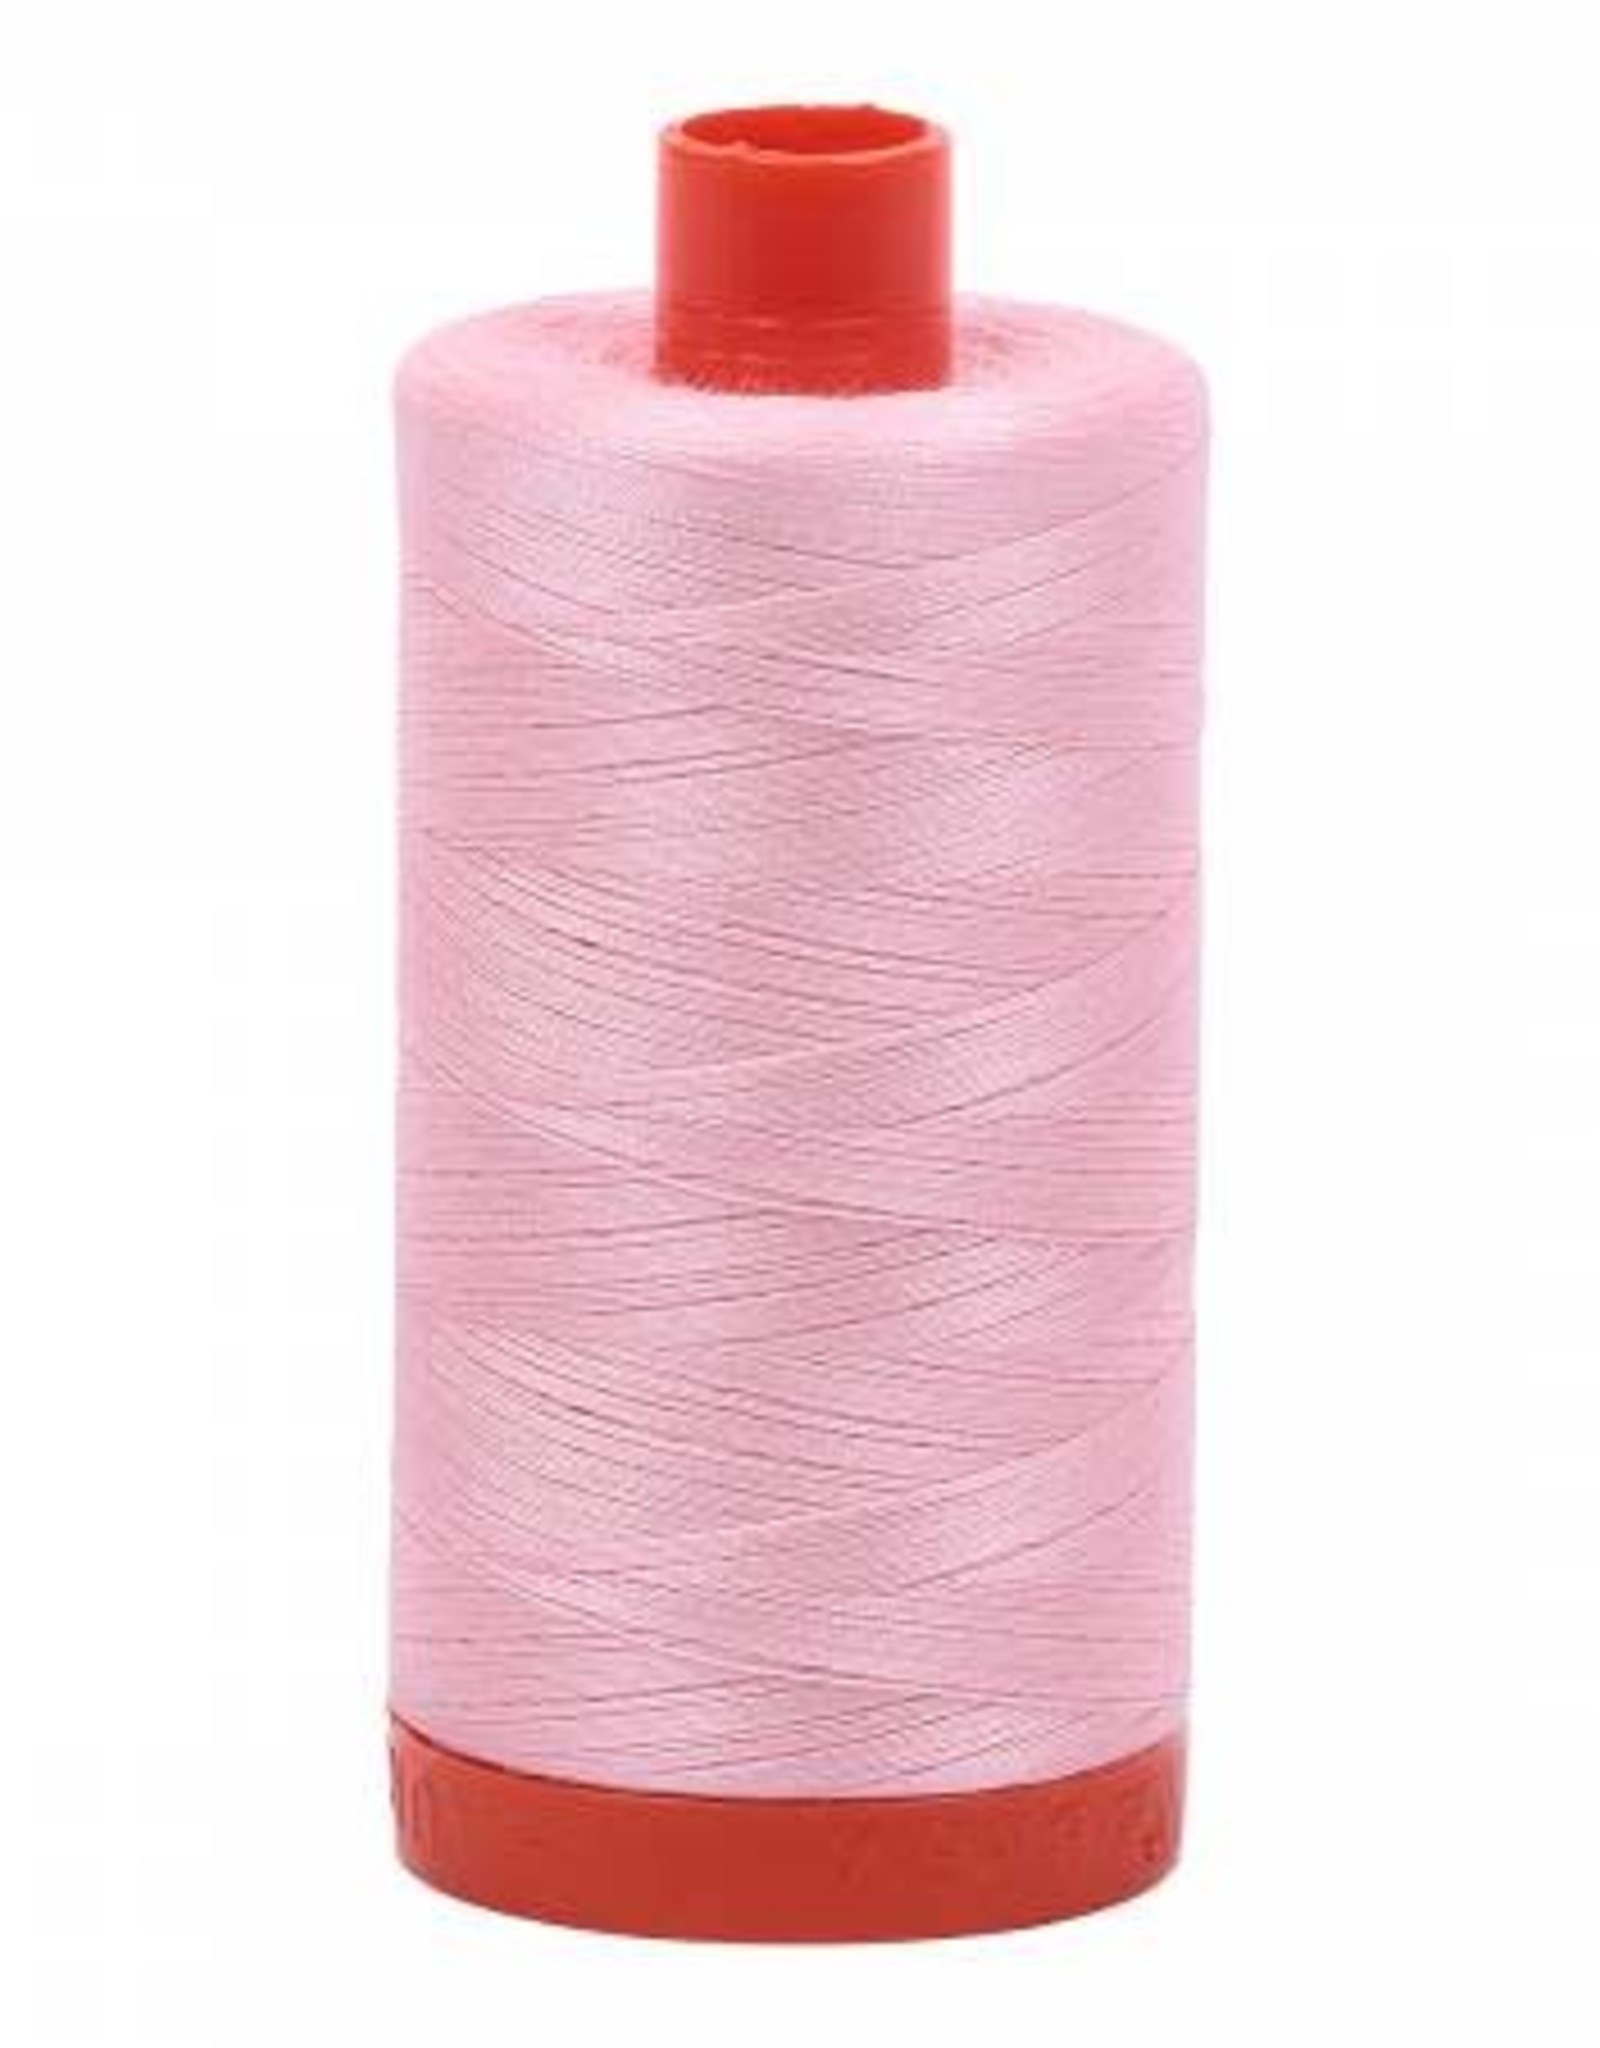 Mako Cotton Thread Solid 50wt - Baby Pink (2423)